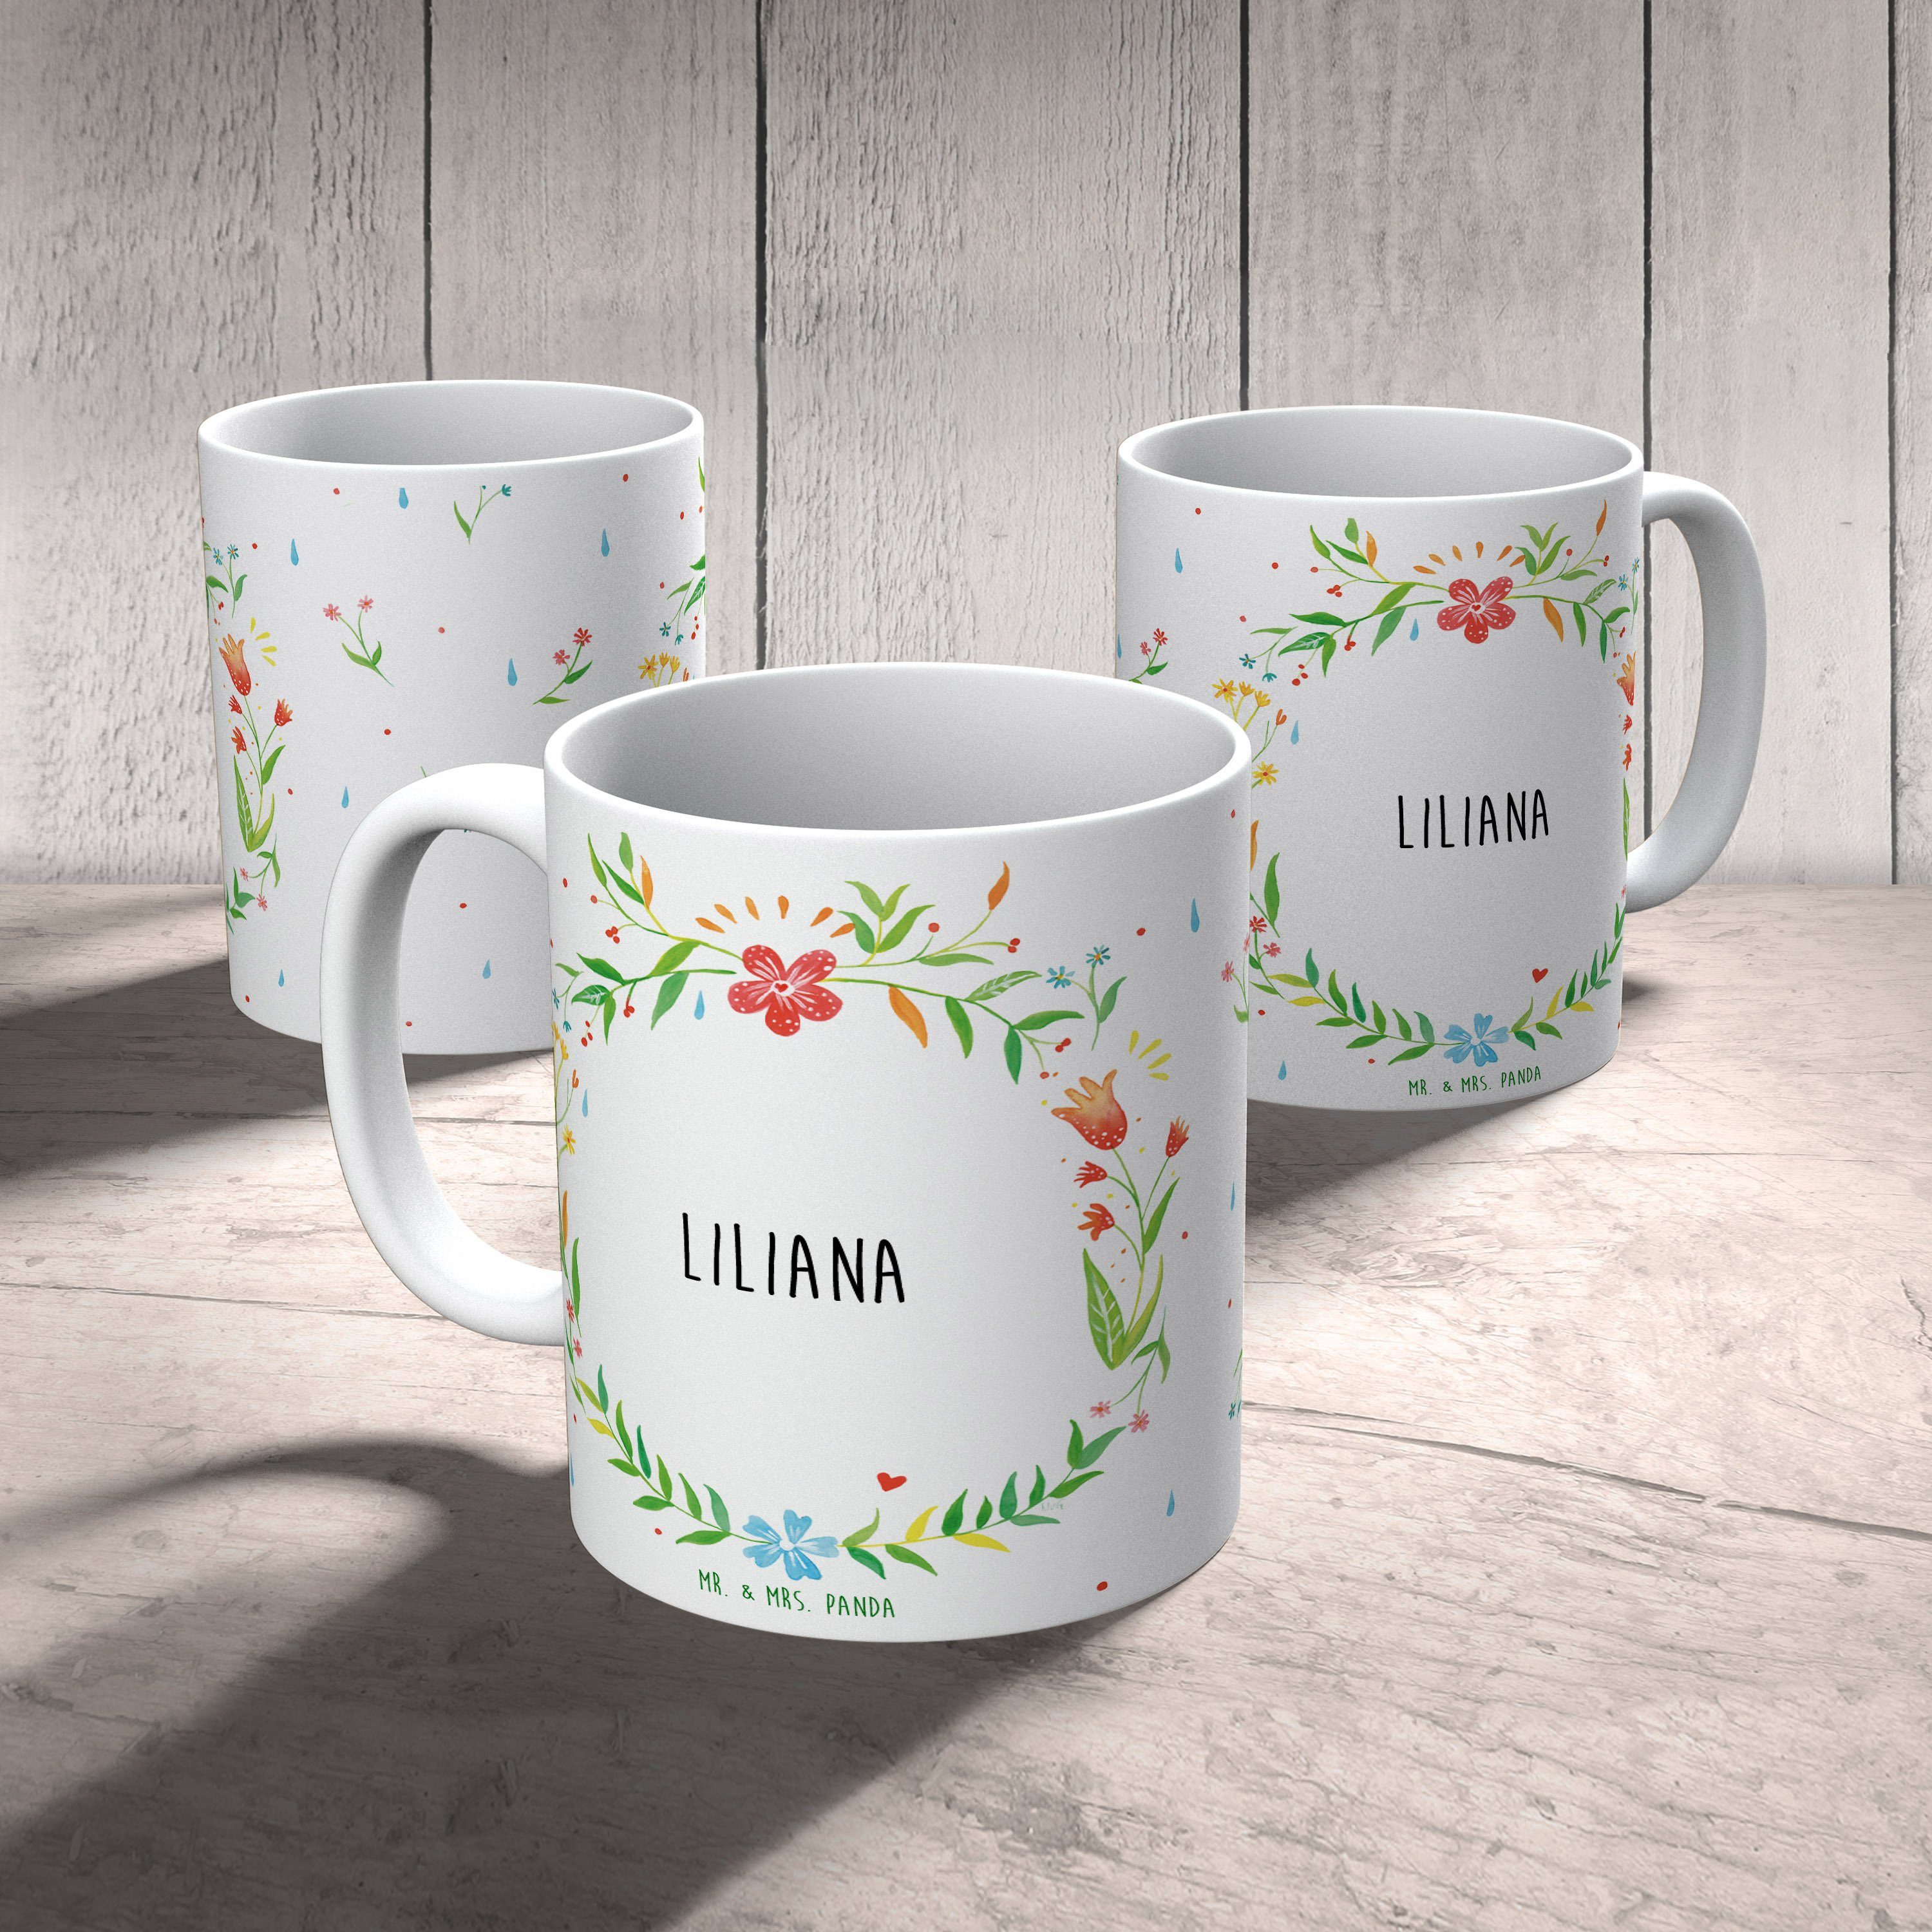 - Tasse Panda & Mrs. Liliana Mo, Keramik Büro Mr. Tasse Geschenk, Sprüche, Tasse Tasse, Kaffeebecher,